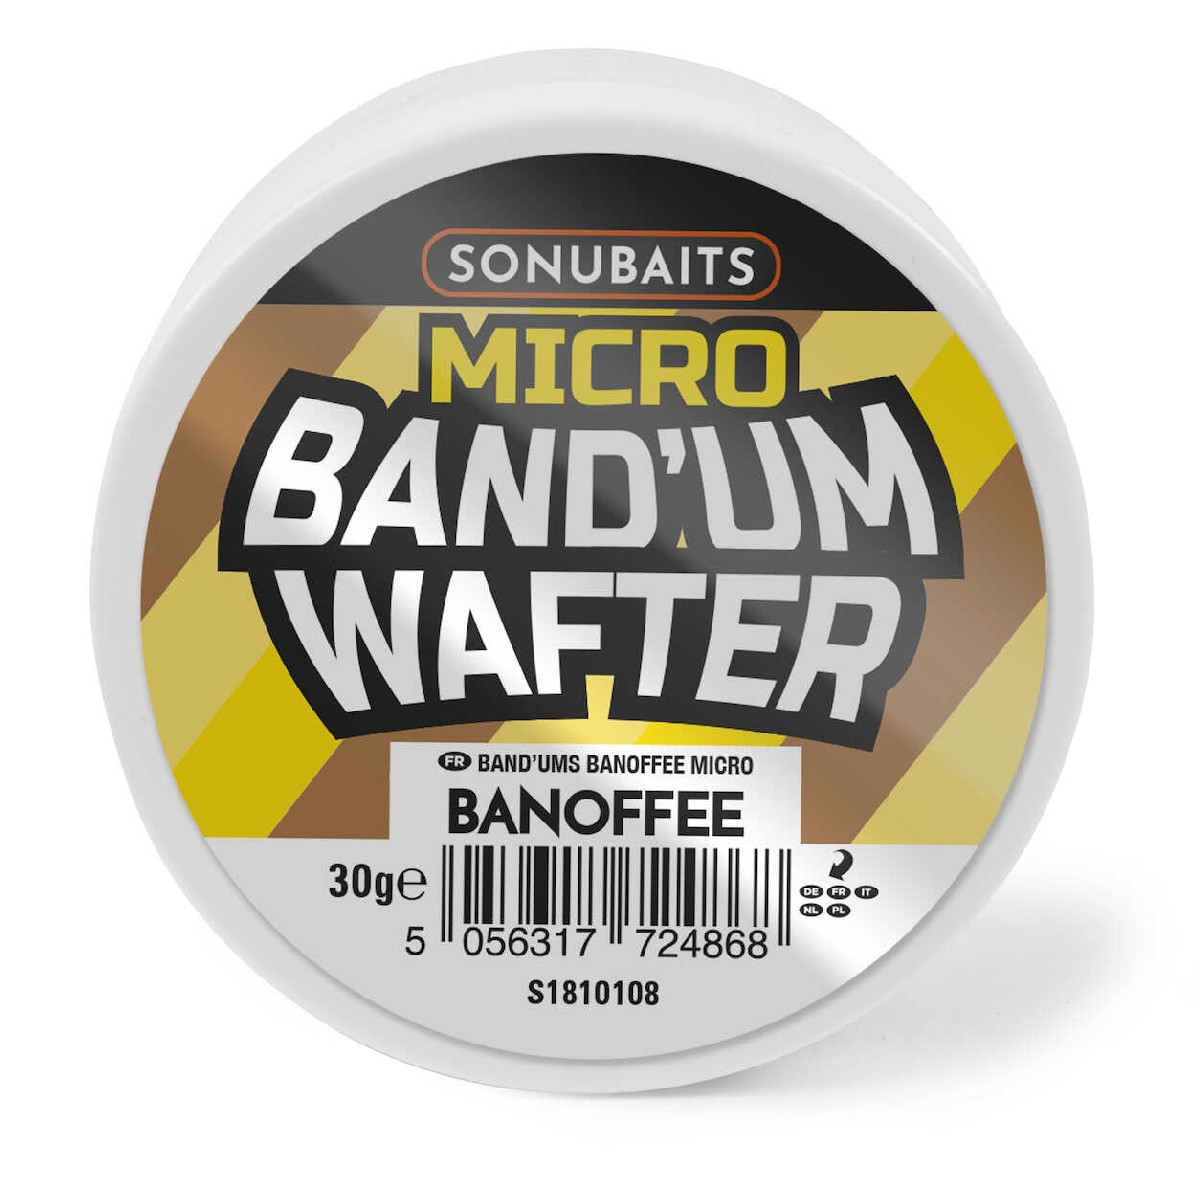 Sonubaits Micro Bandums Banoffee